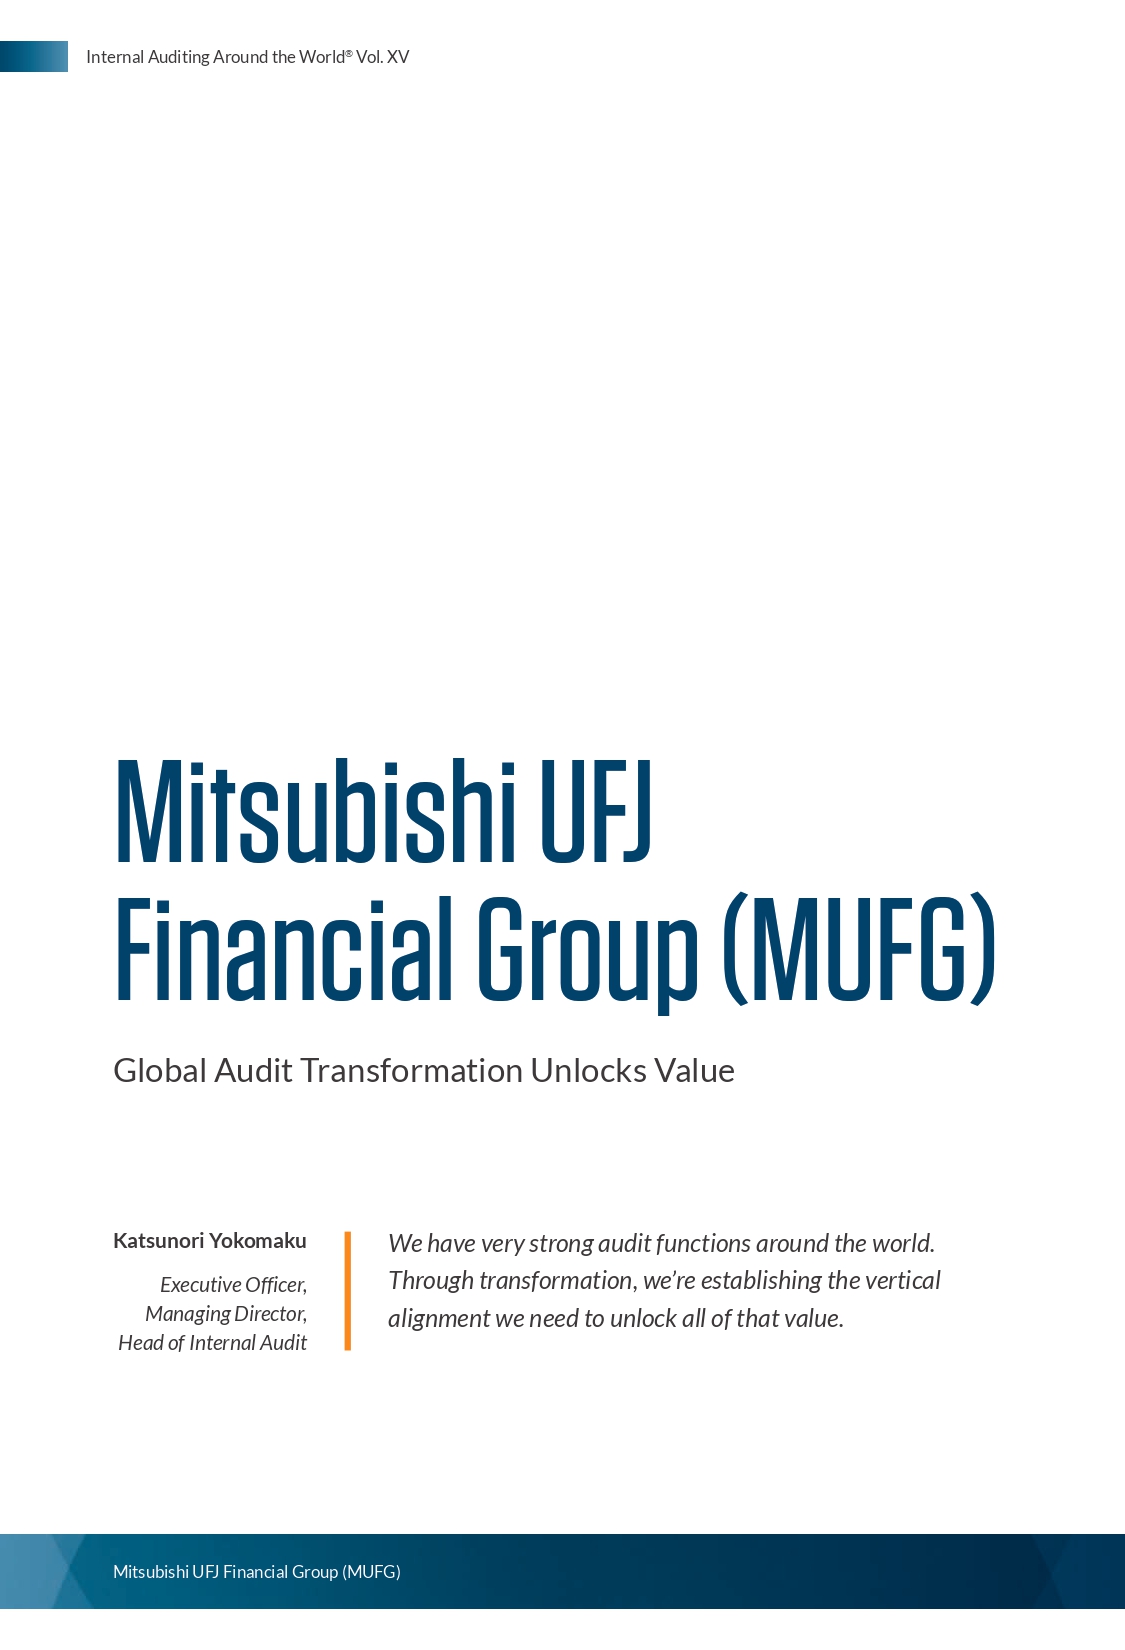 Screenshot of the first page of Mitsubishi UFJ Financial Group (MUFG) Global Audit Transformation Unlocks Value